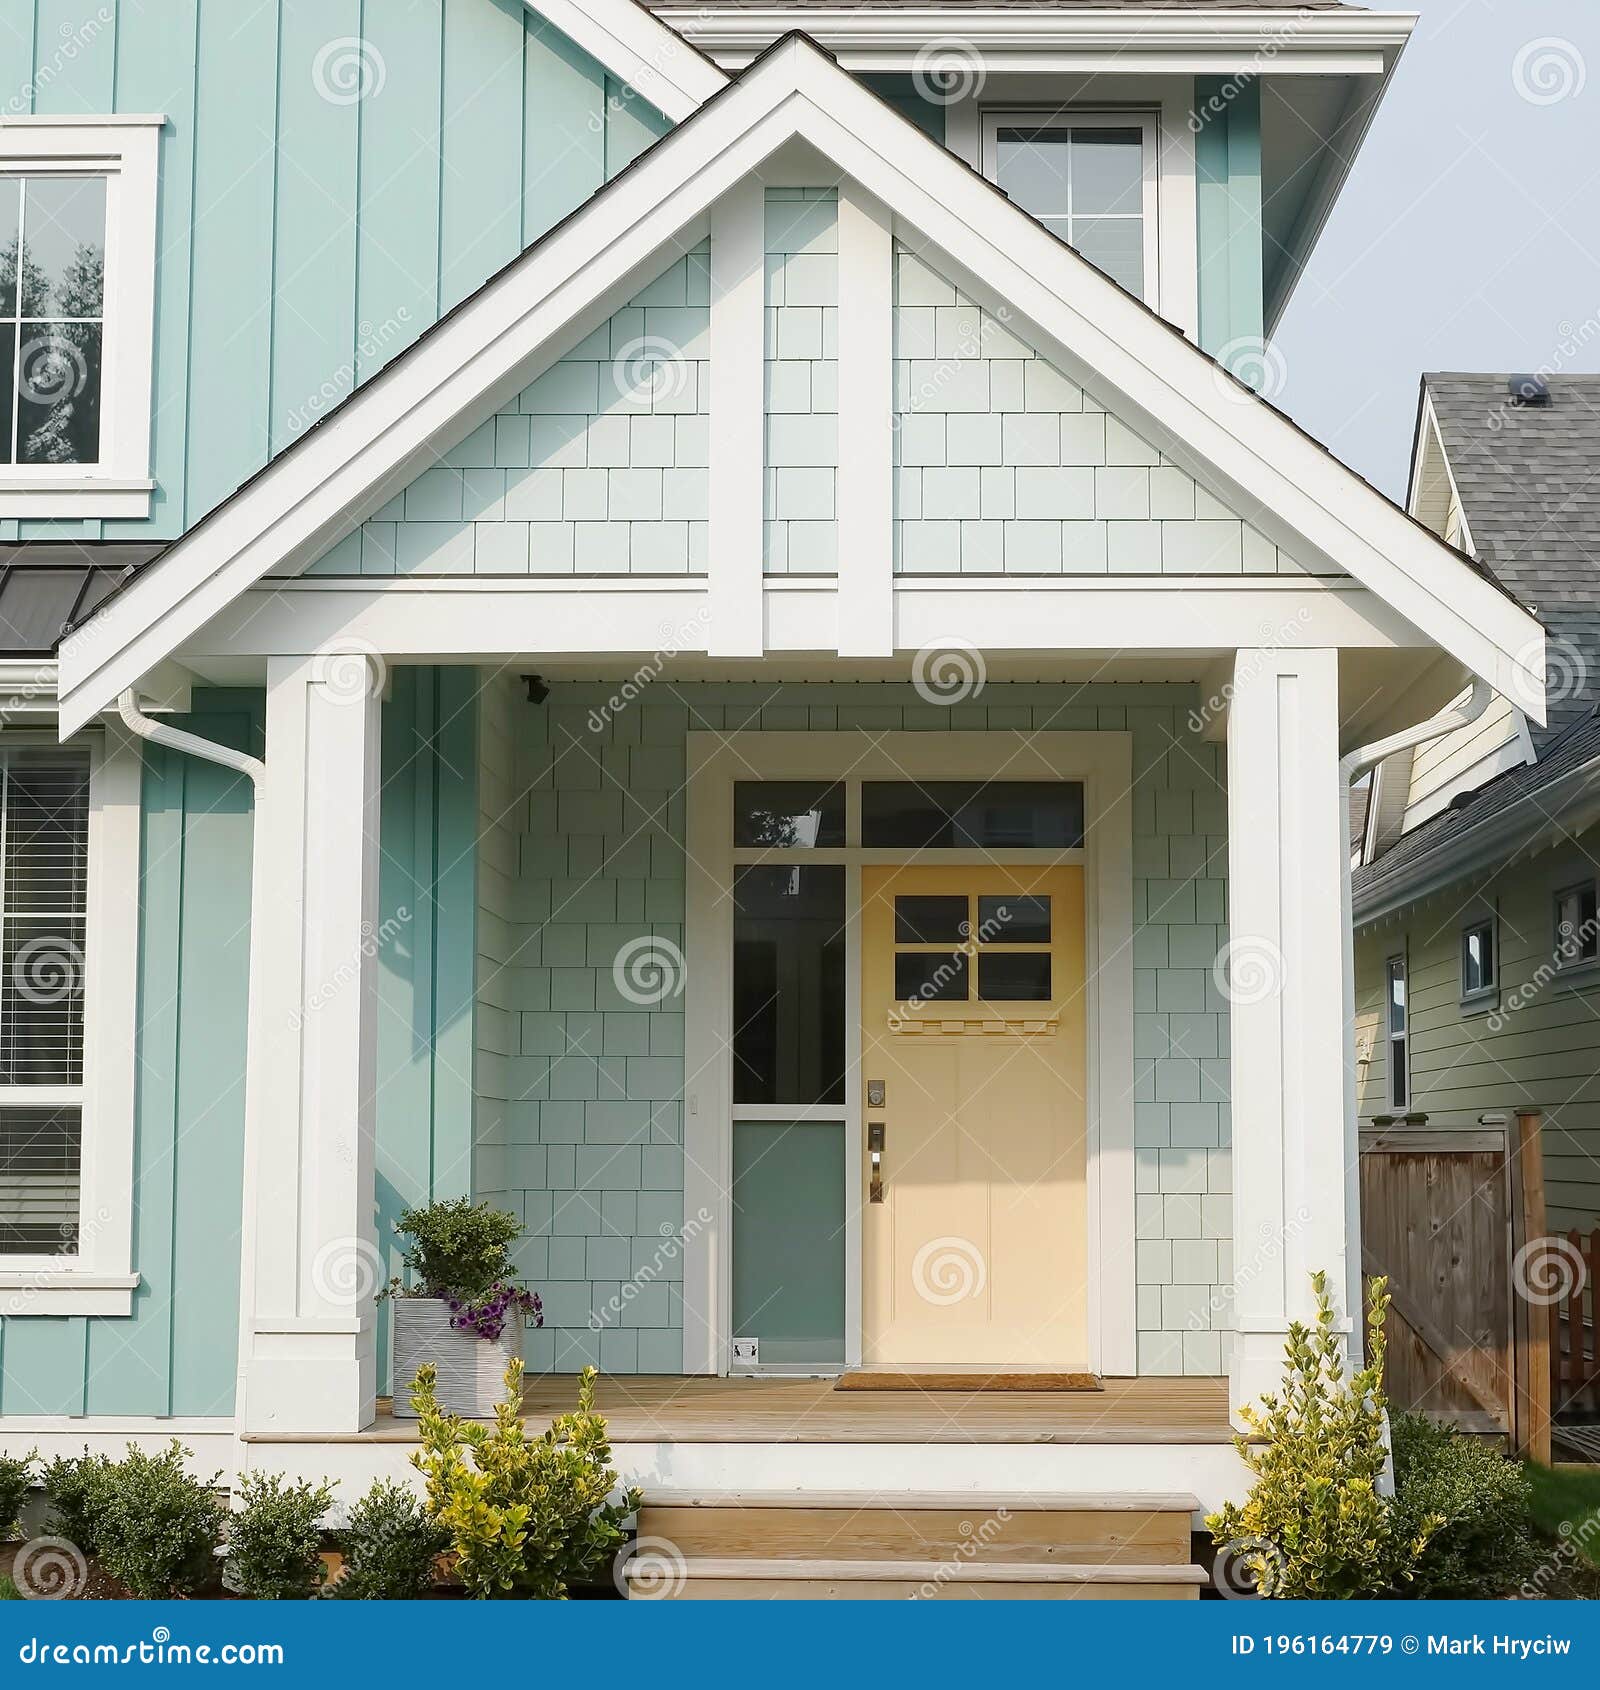 house home pastel yellow door exterior front  elevation roof details